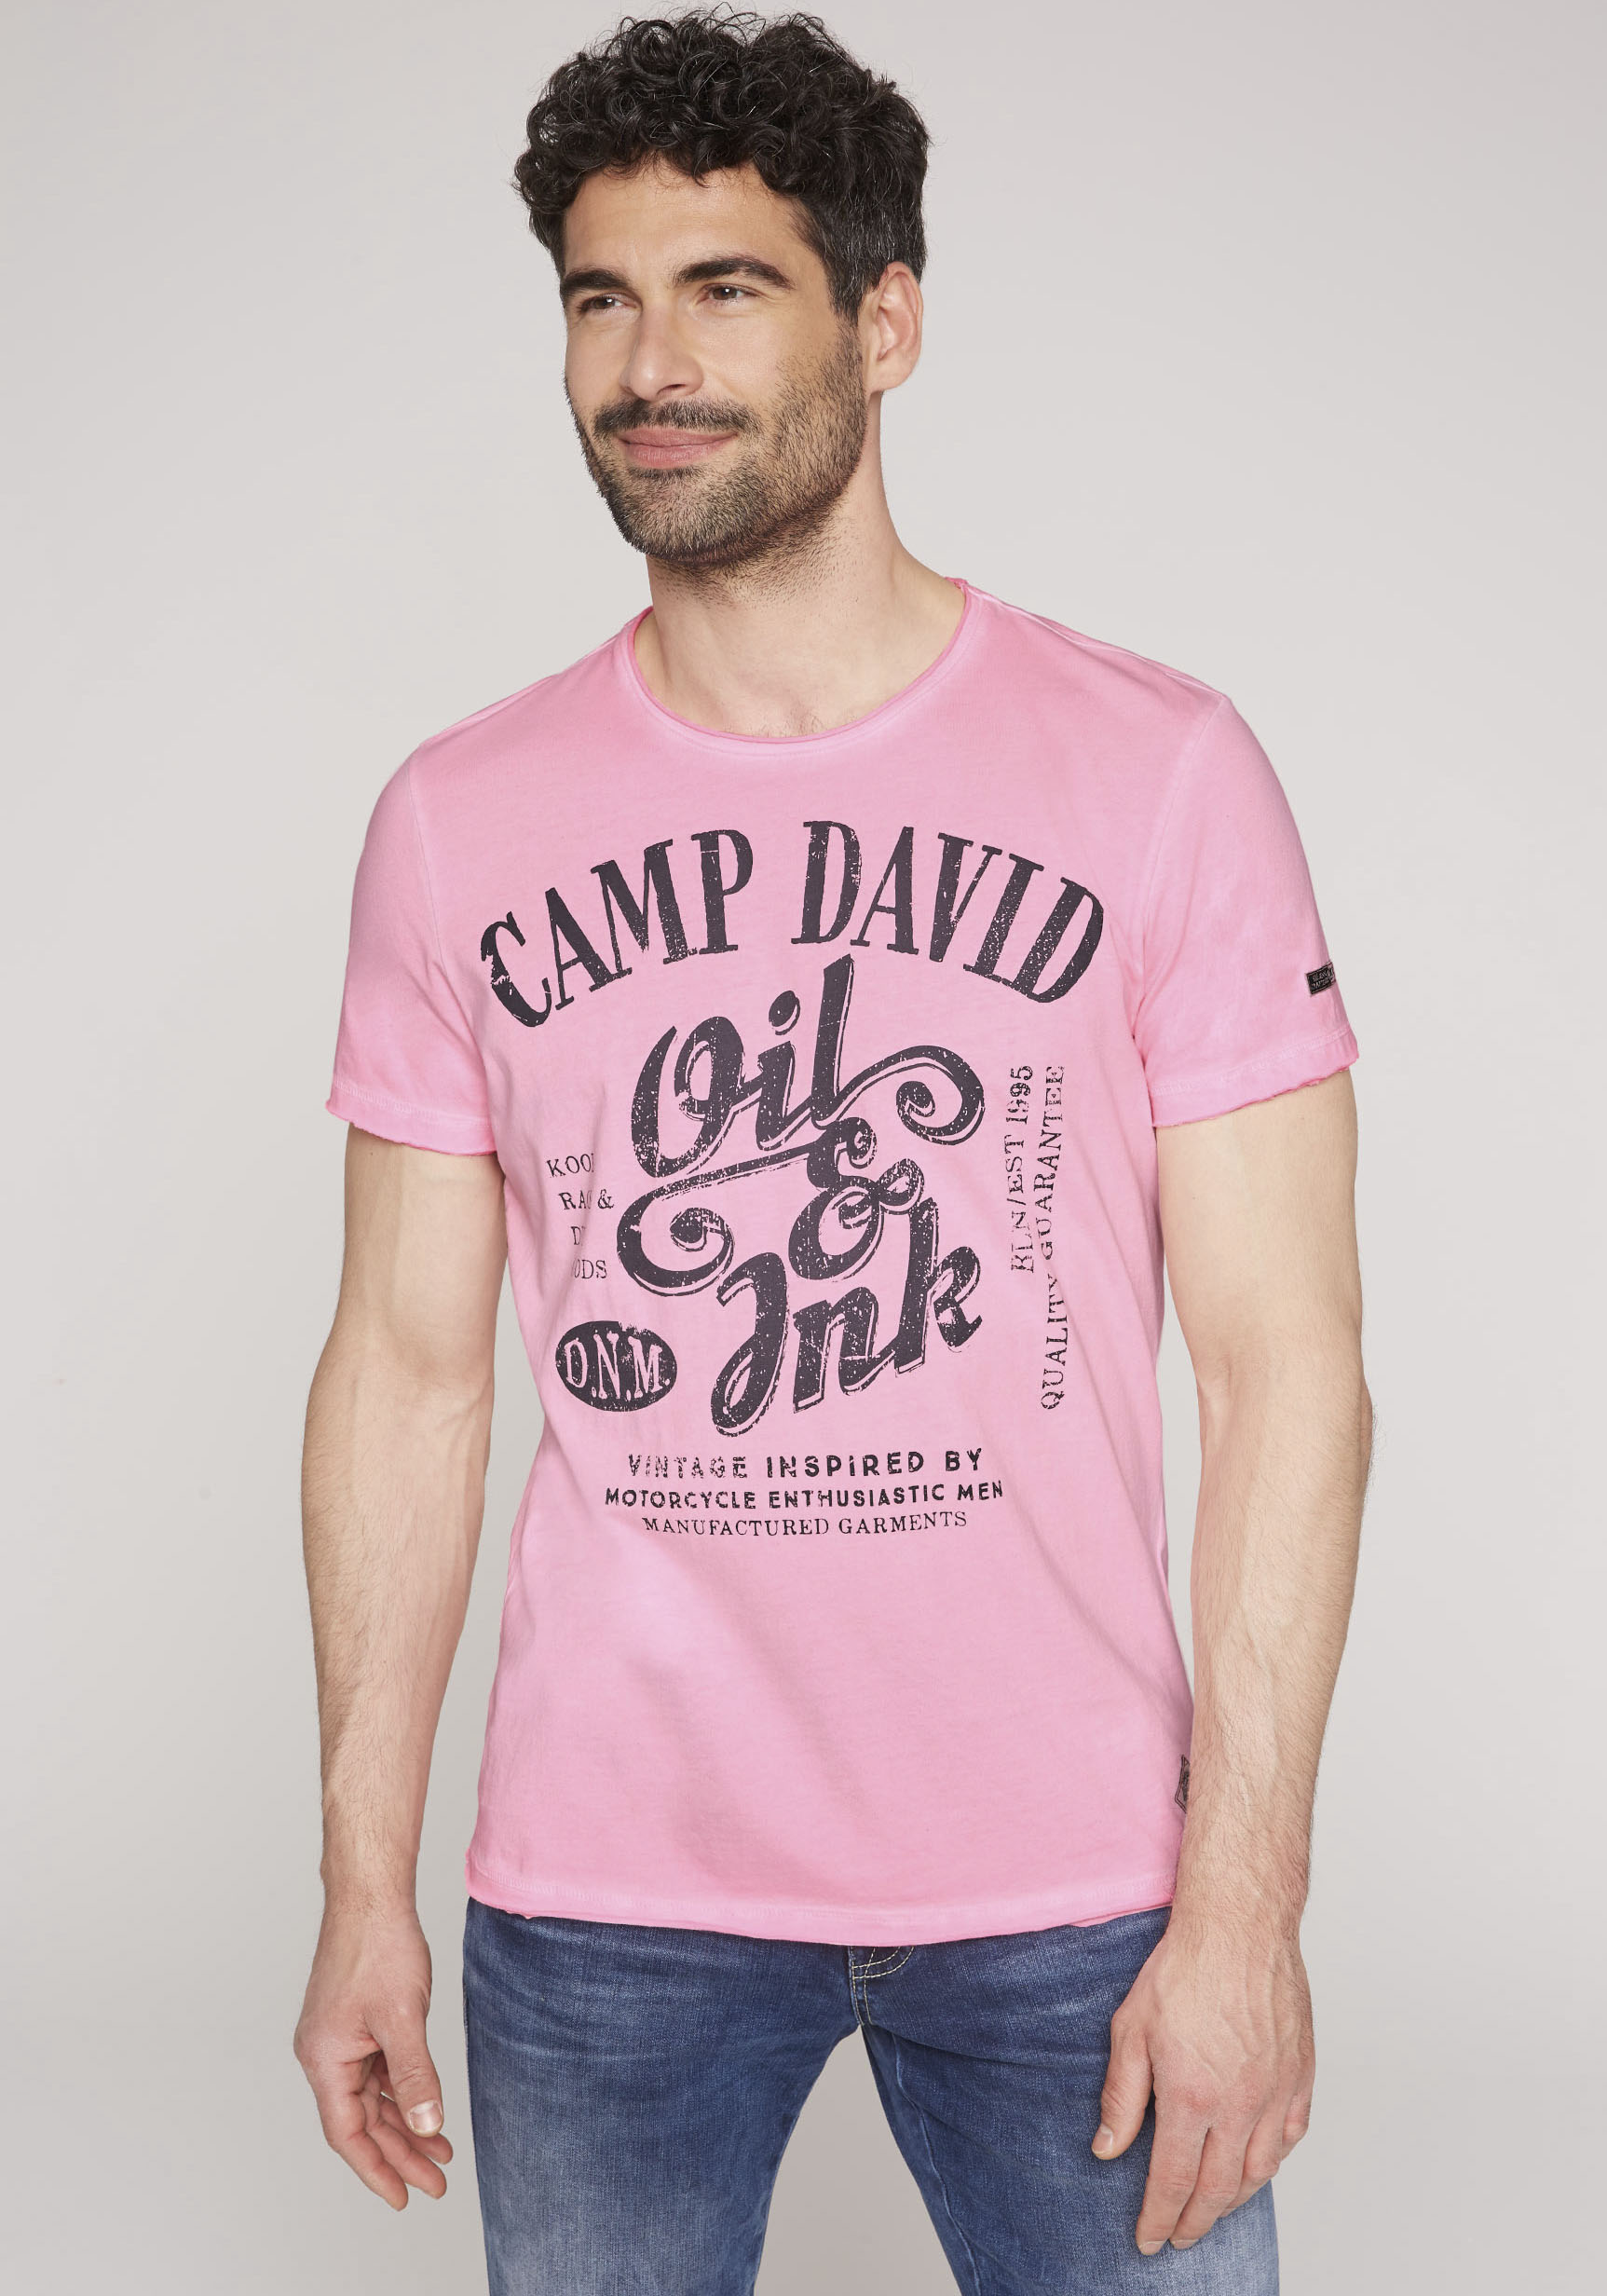 CAMP DAVID T-Shirt von camp david